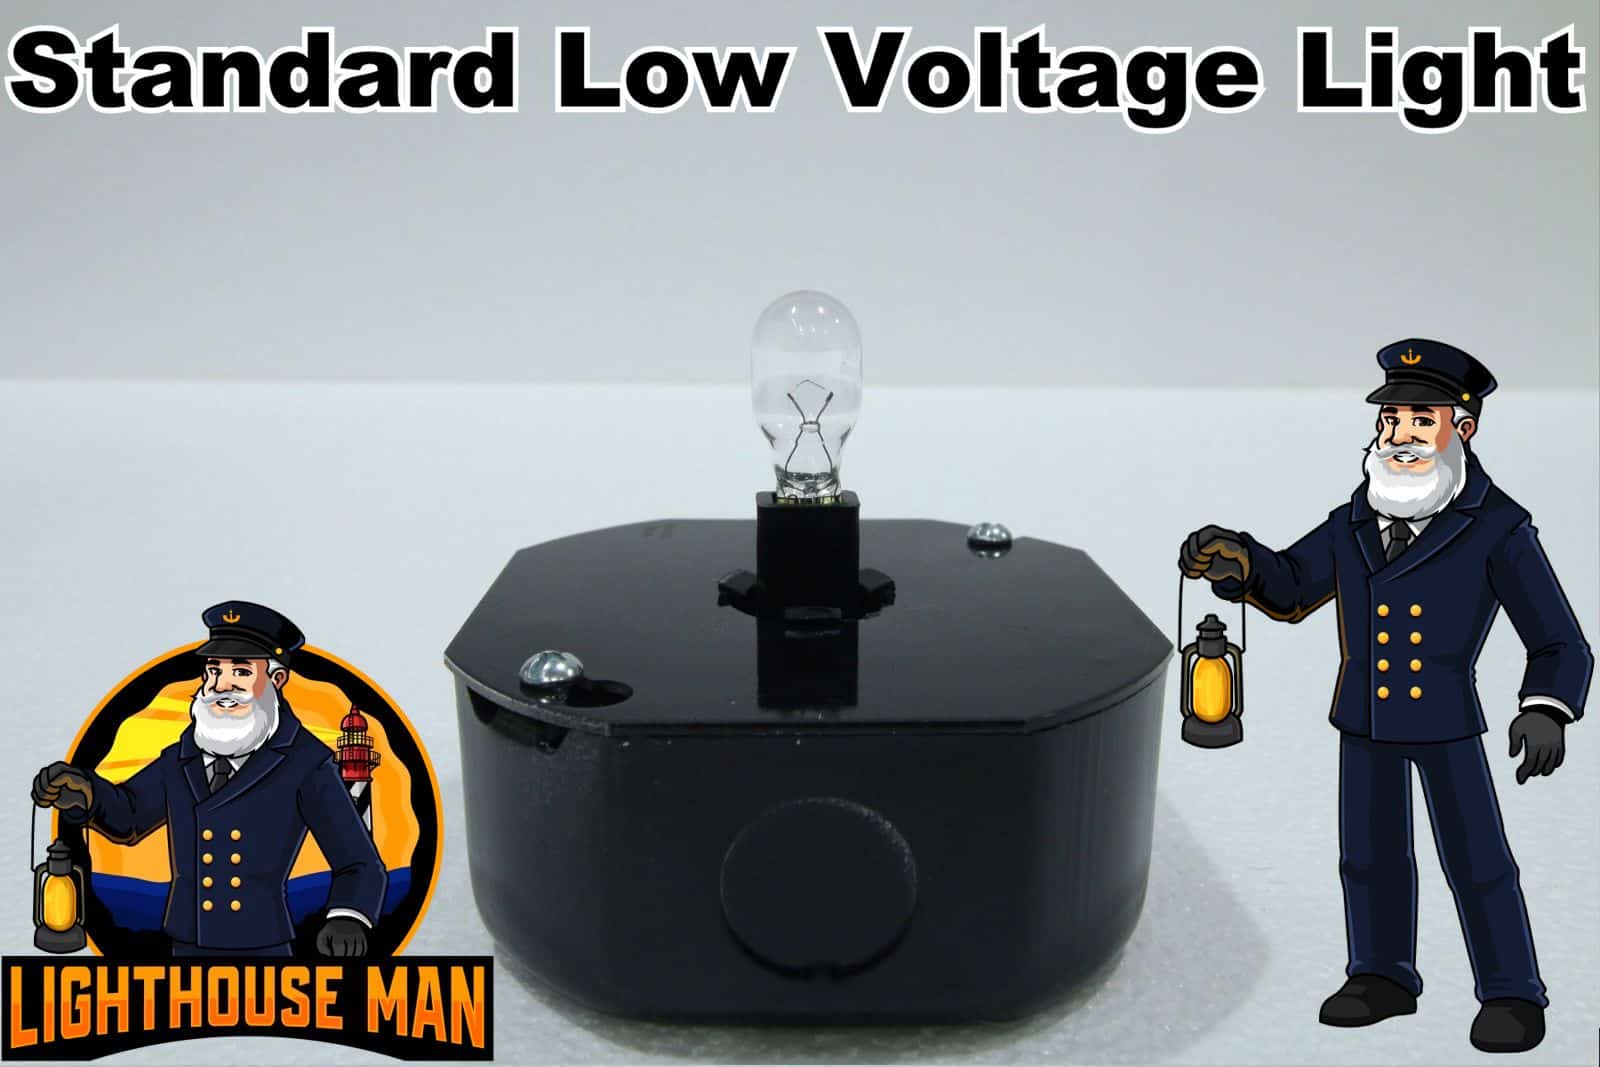 Standard Low Voltage Light